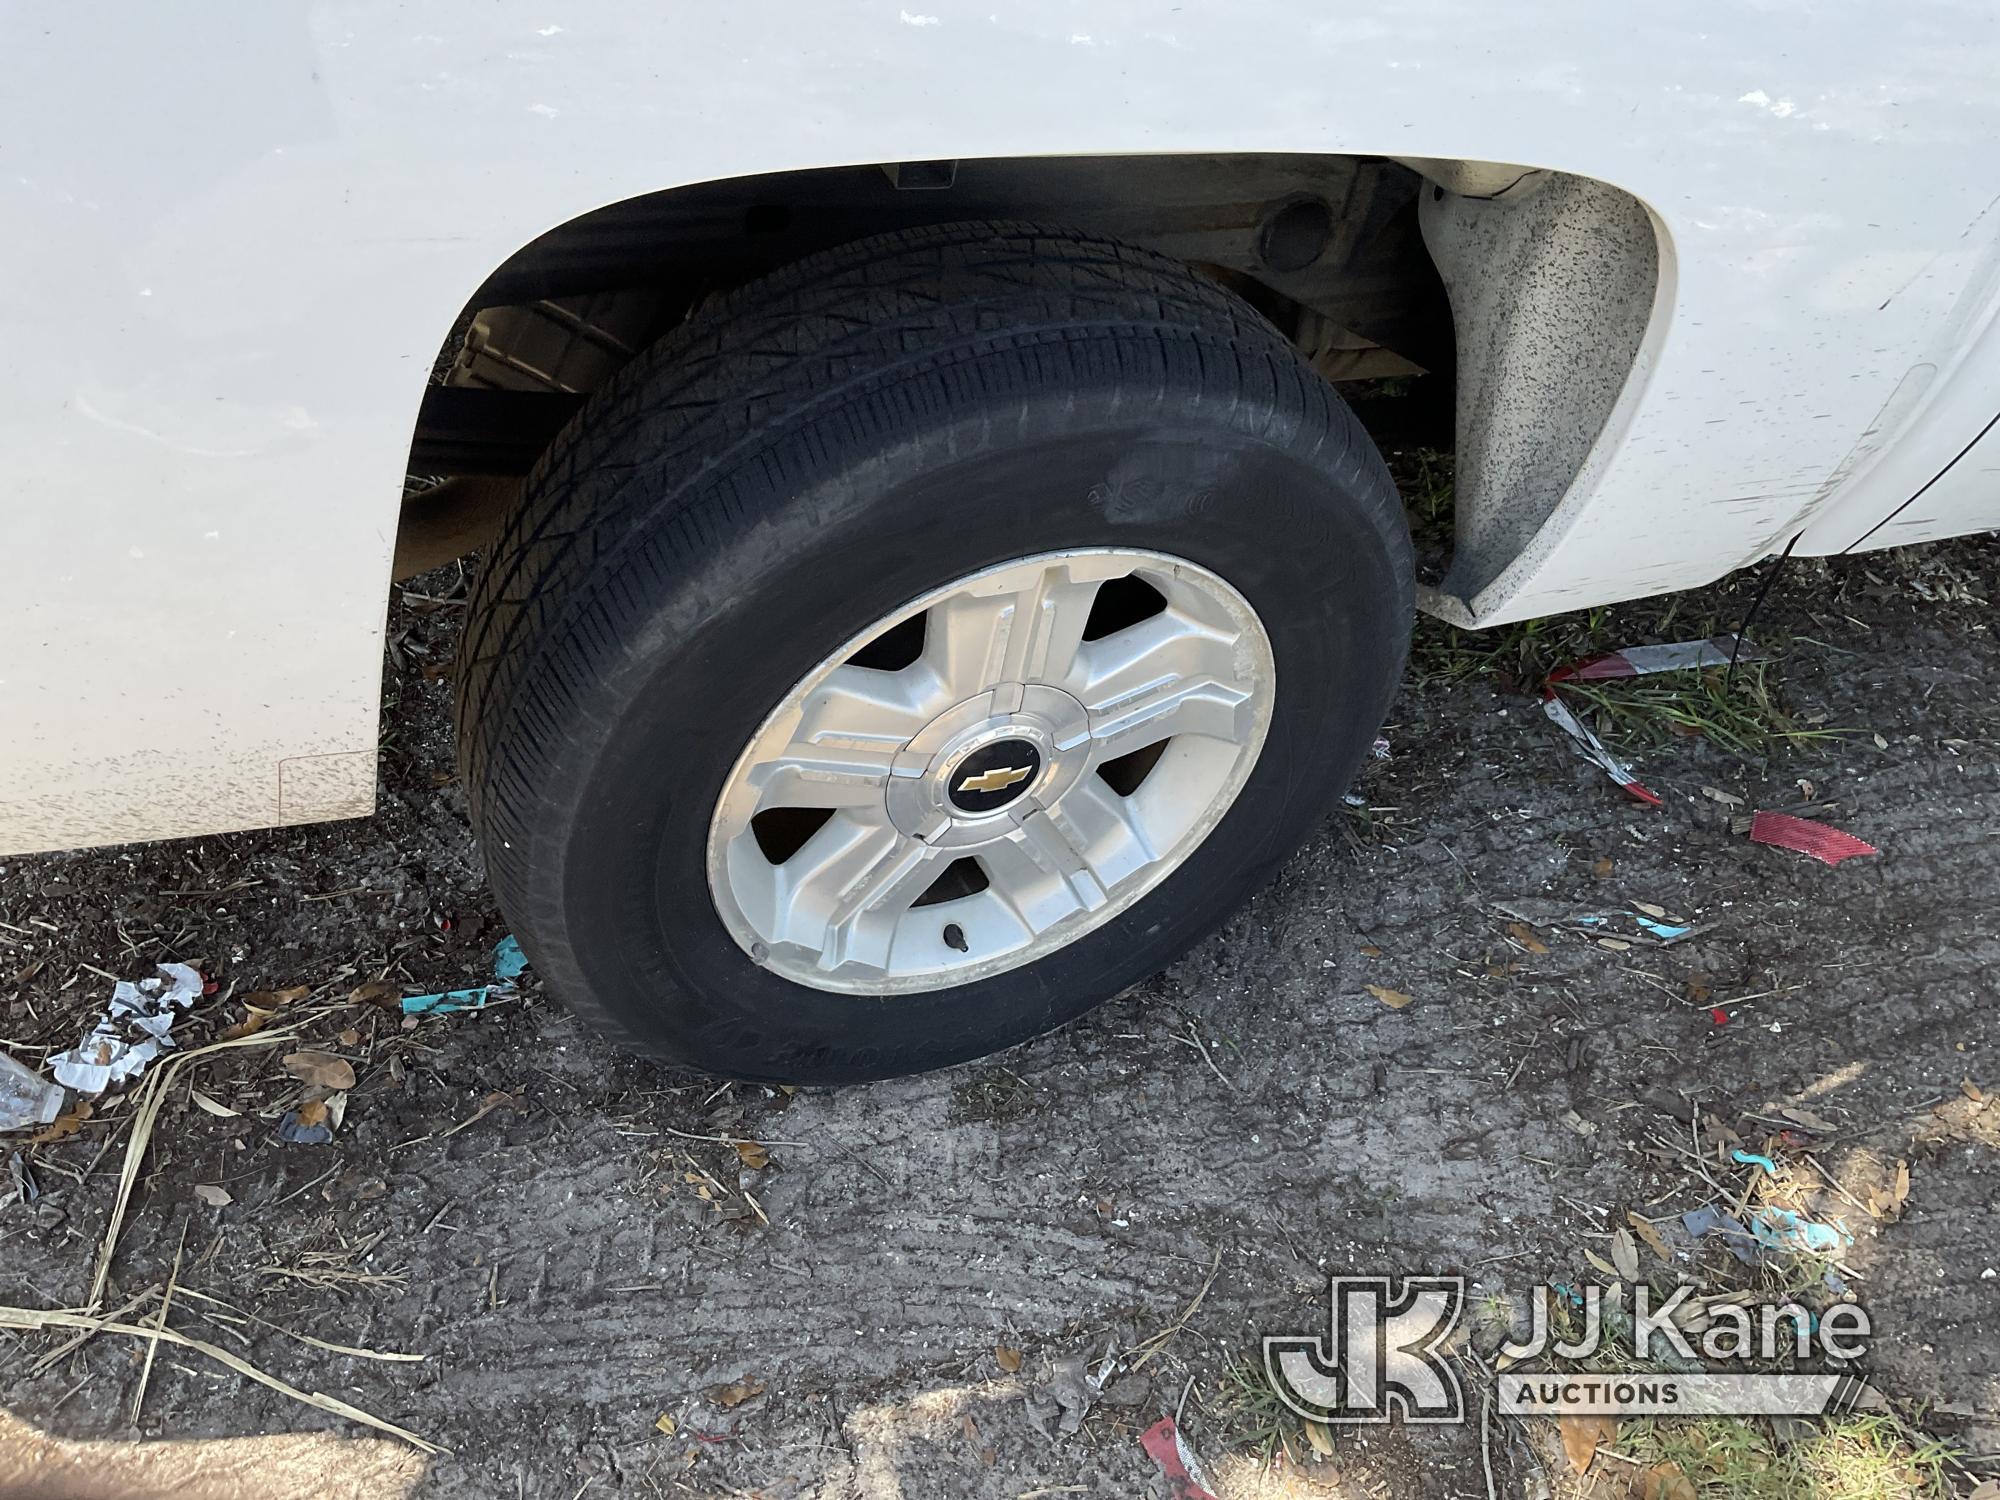 (Tampa, FL) 2012 Chevrolet Silverado 1500 Crew-Cab Pickup Truck Not Running, Condition Unknown